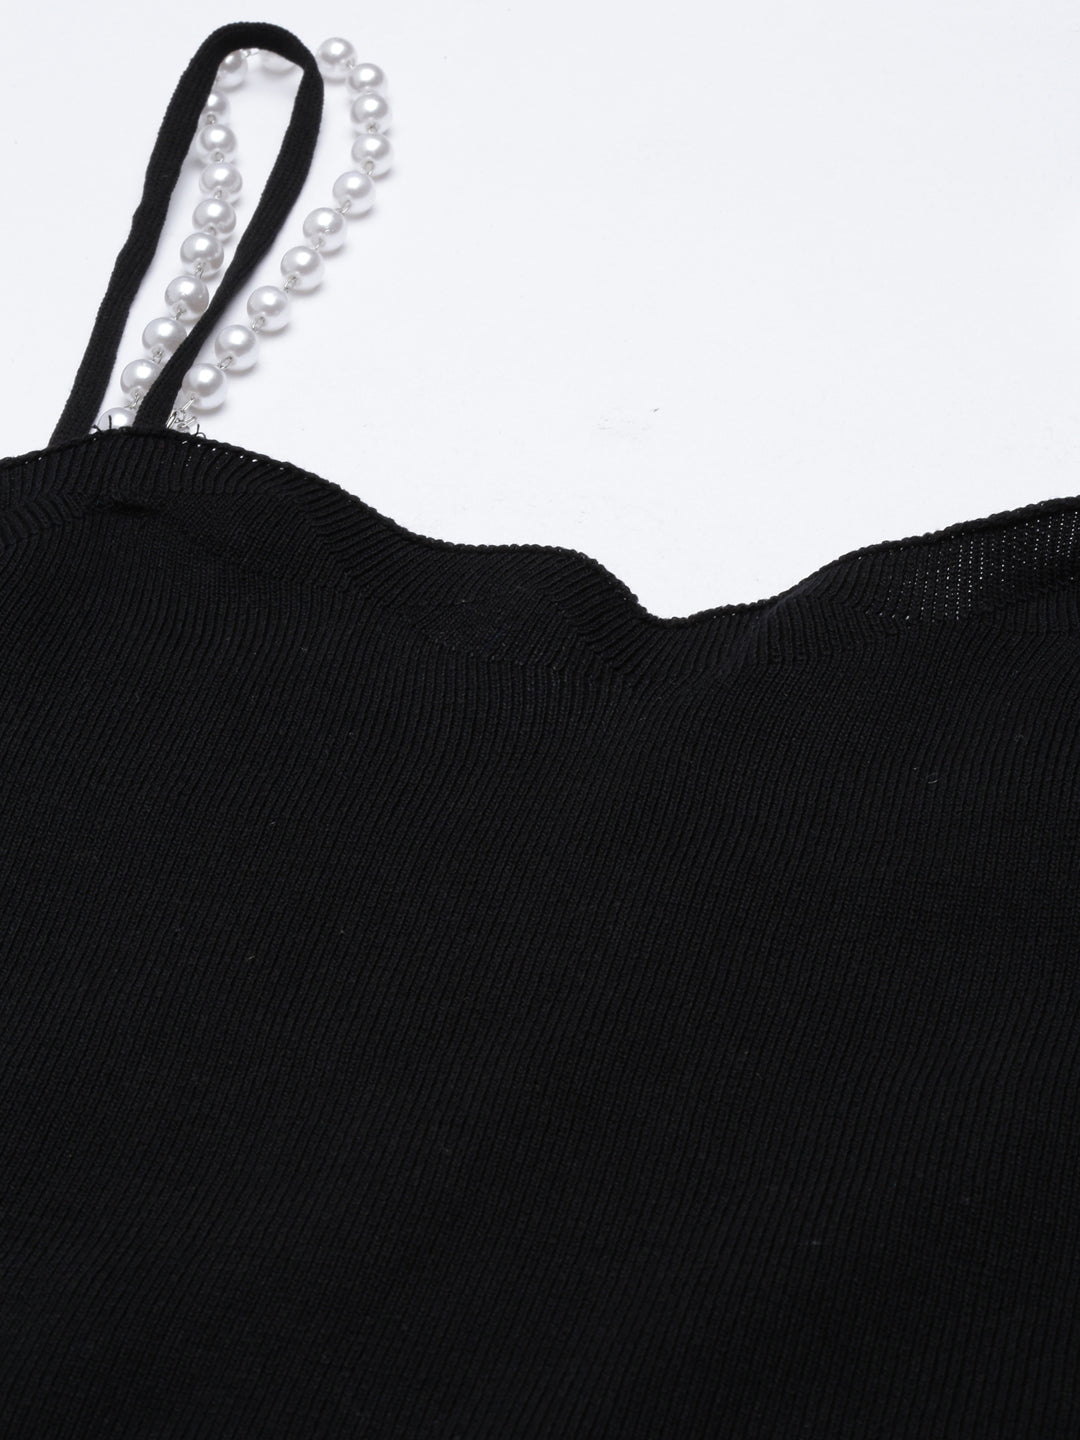 Shoulder Straps Solid Sleeveless Black Crop Tank Top